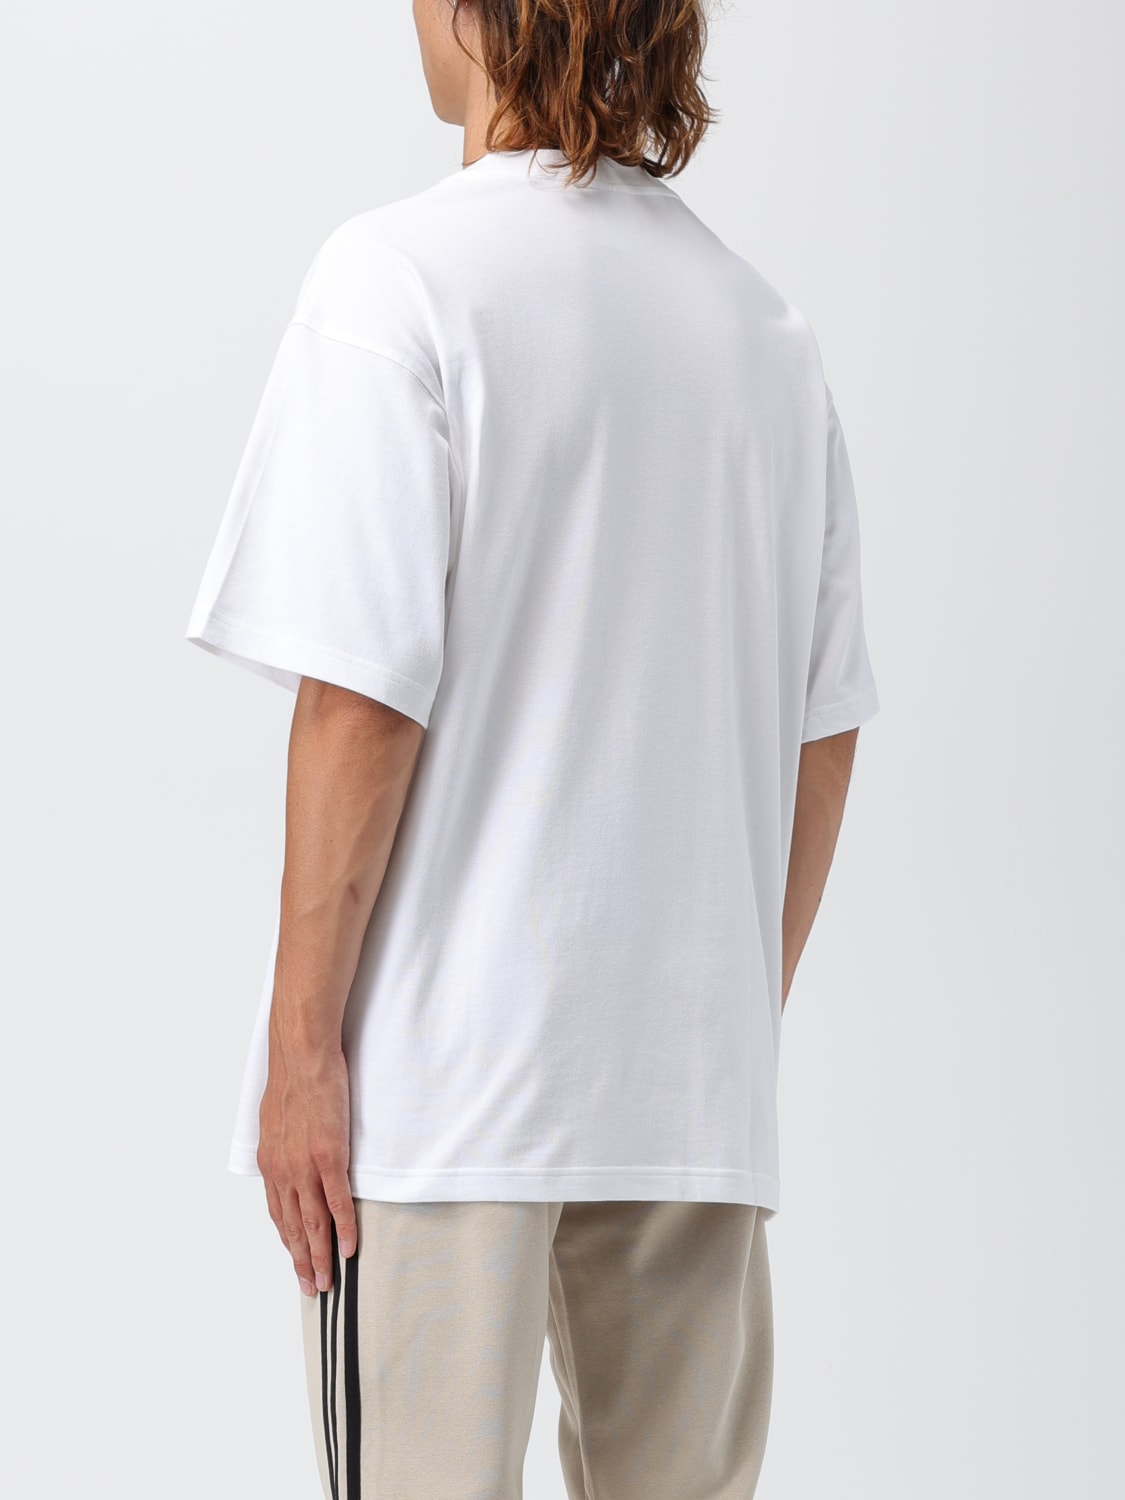 - | Adidas IM4388 t-shirt t- at shirt White online ORIGINALS: logo ADIDAS Originals cotton with